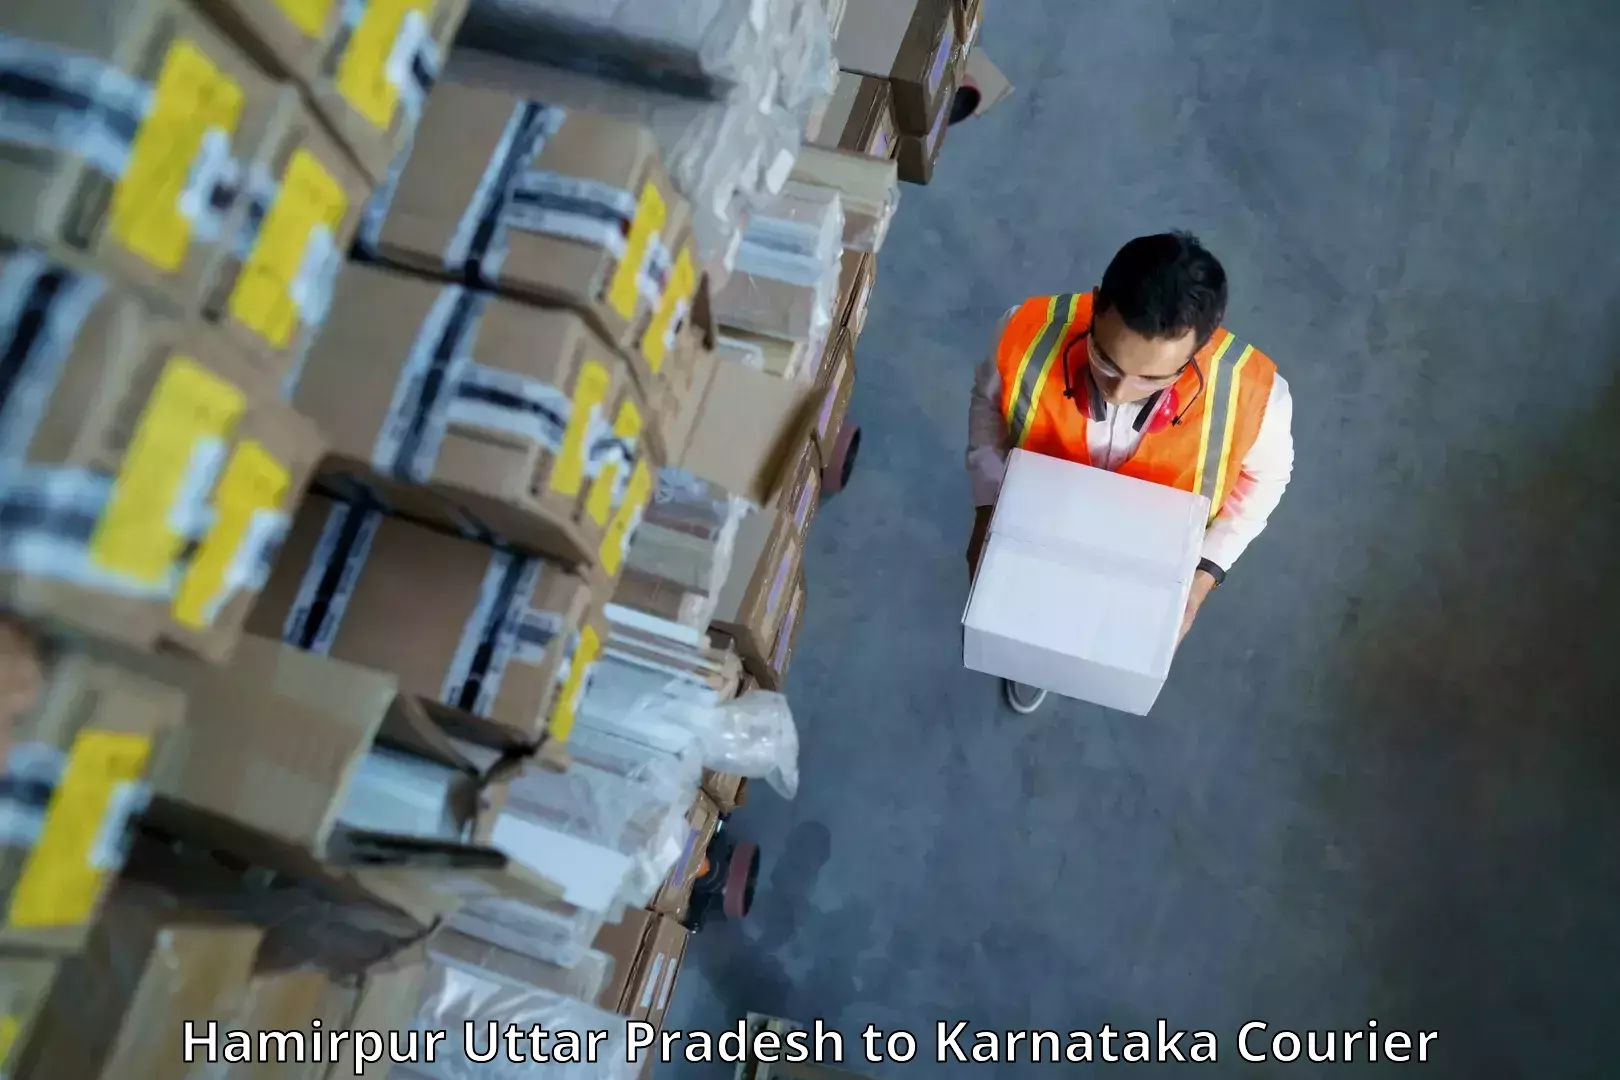 Package delivery network Hamirpur Uttar Pradesh to Mannaekhelli